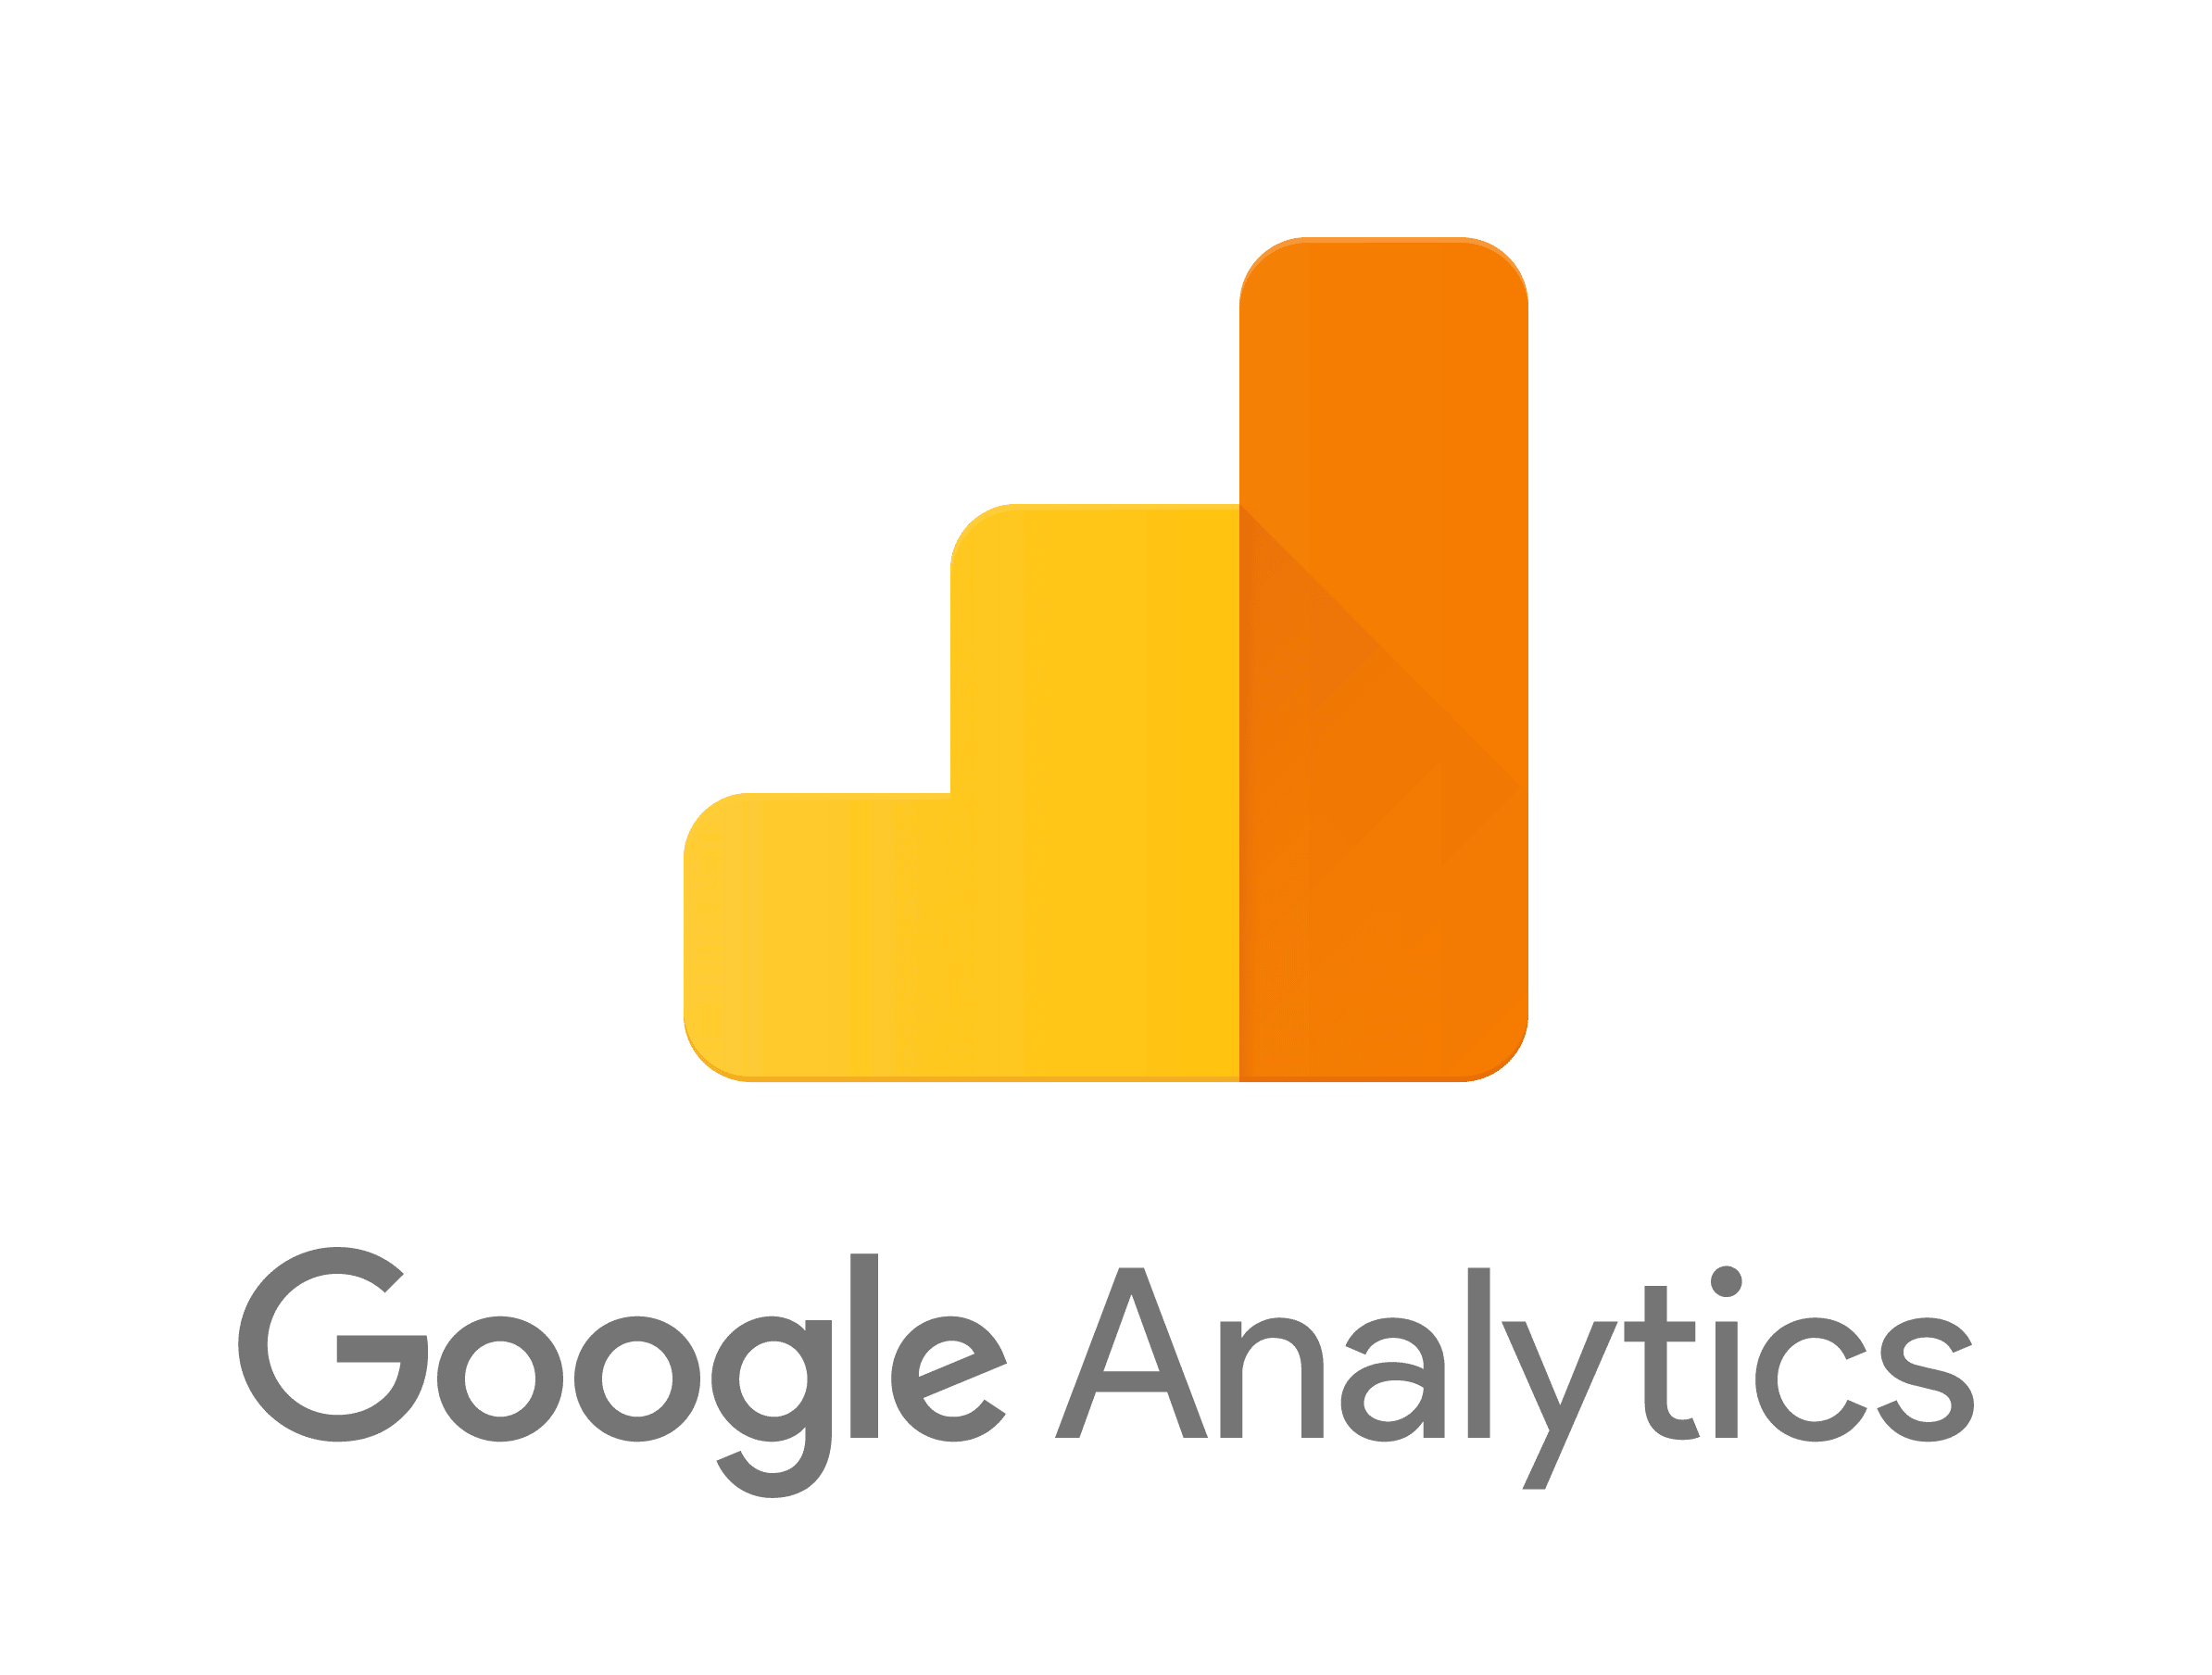 How to Set Up Google Analytics